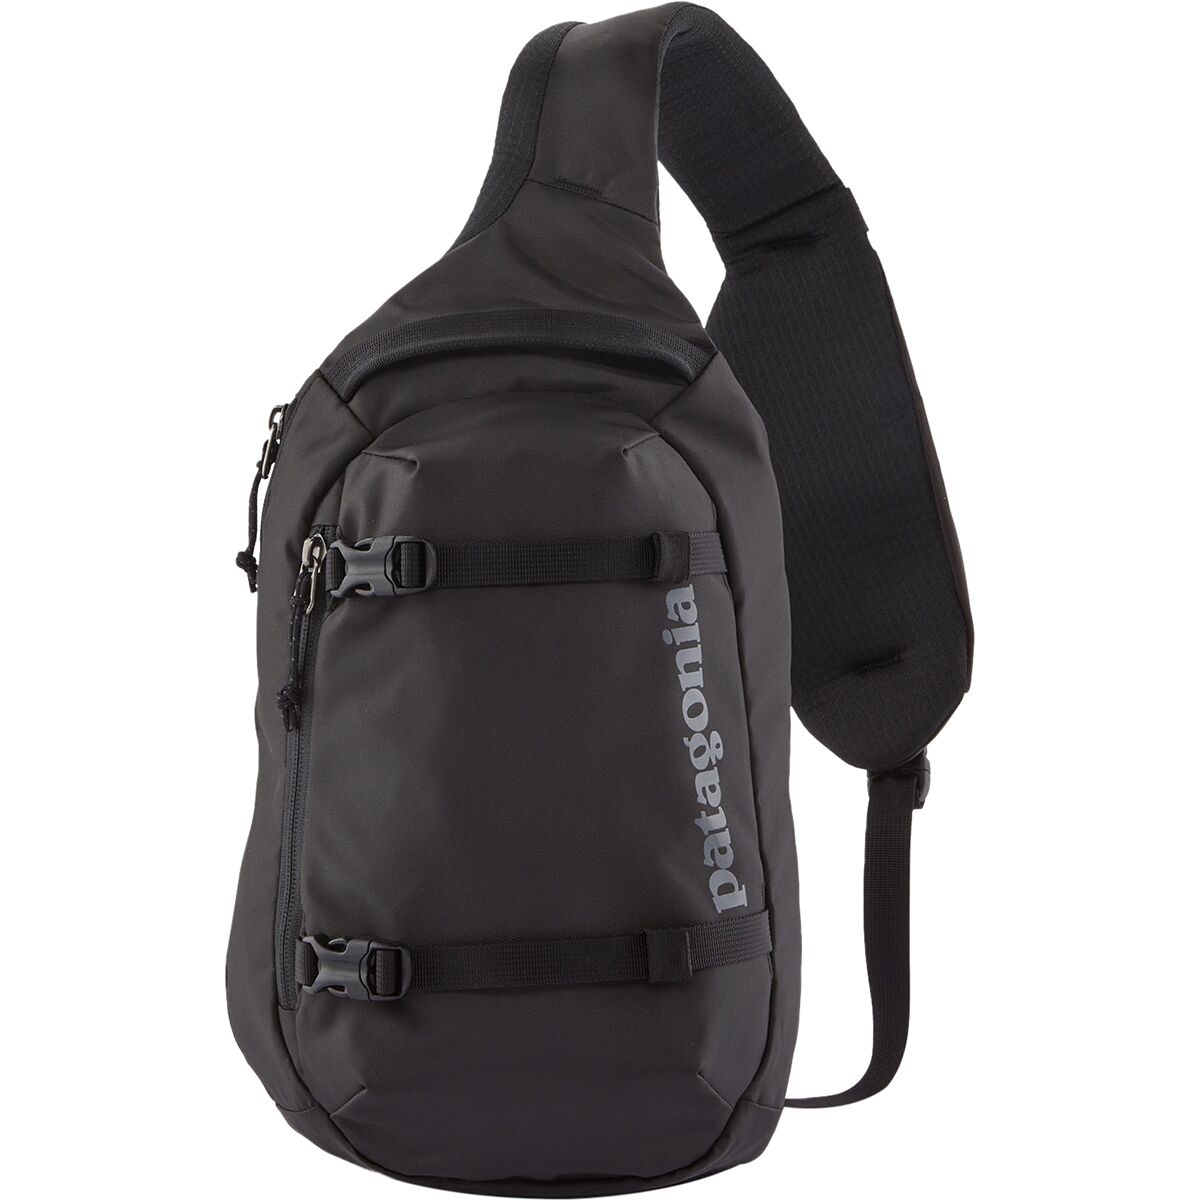 Patagonia Atom 8L Sling Bag Black, One Size